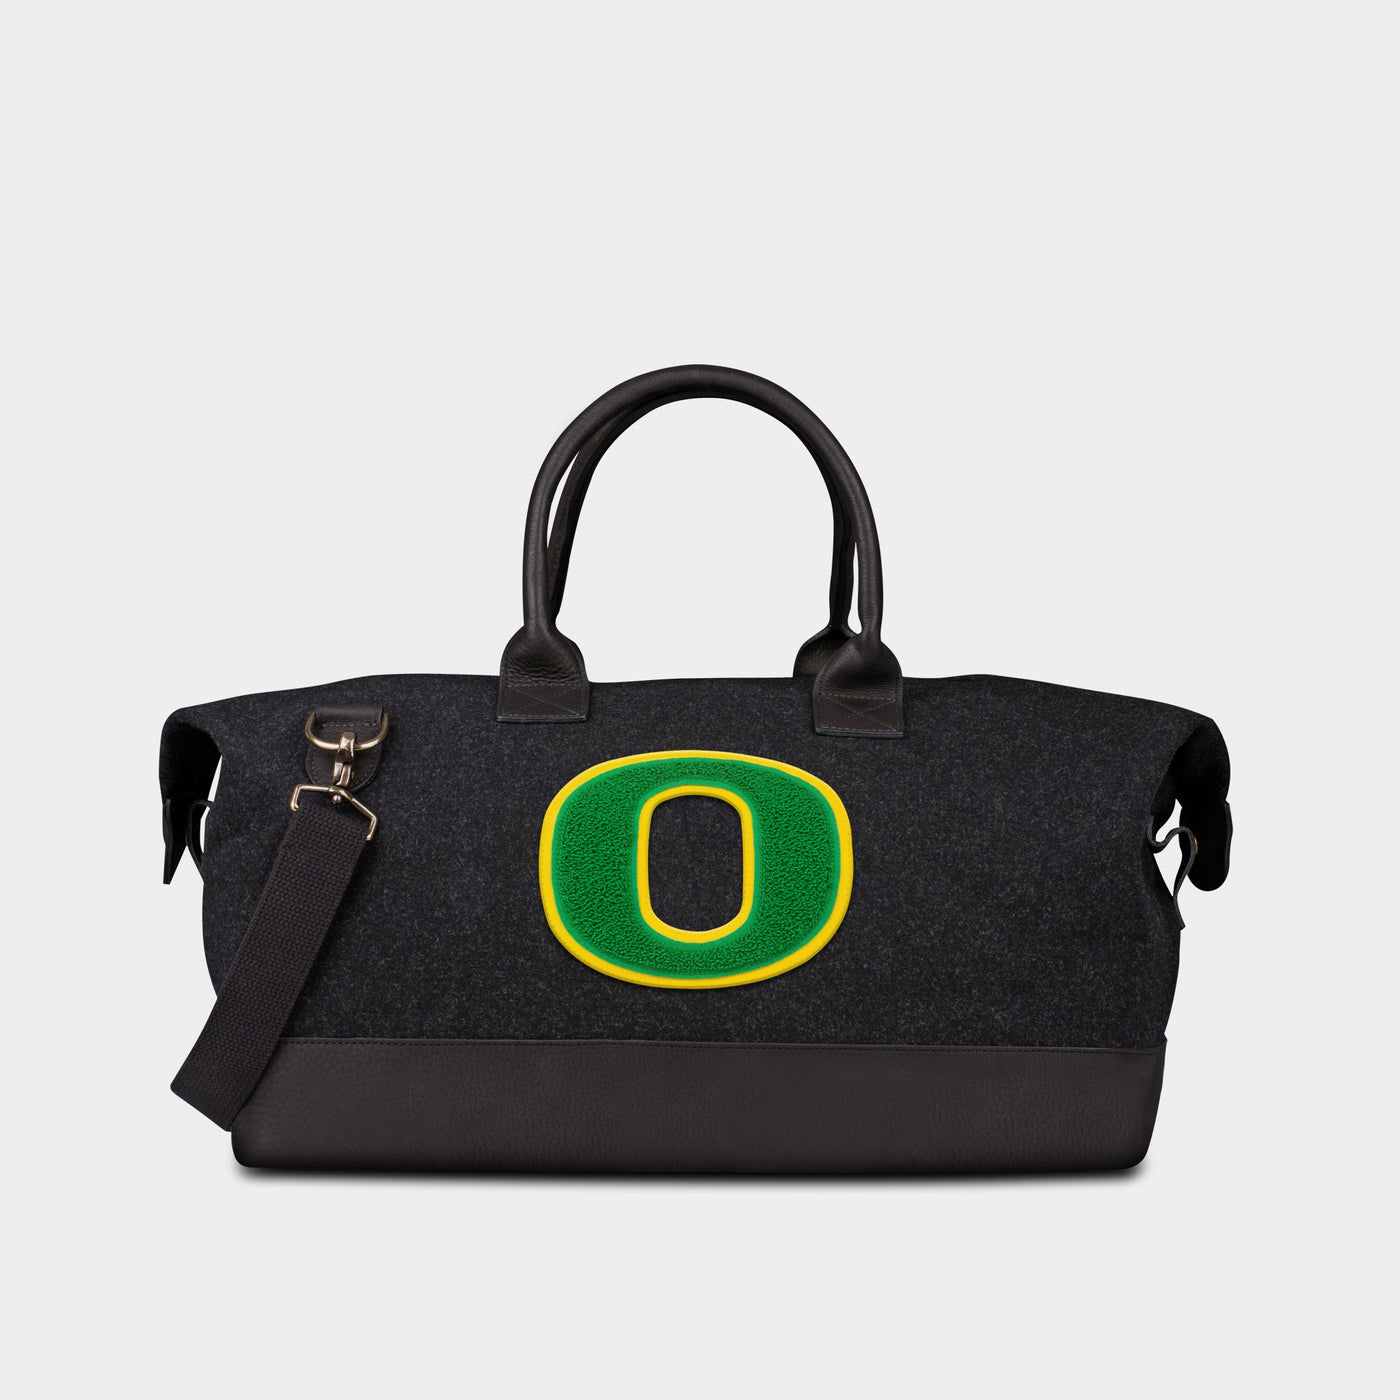 Oregon bag